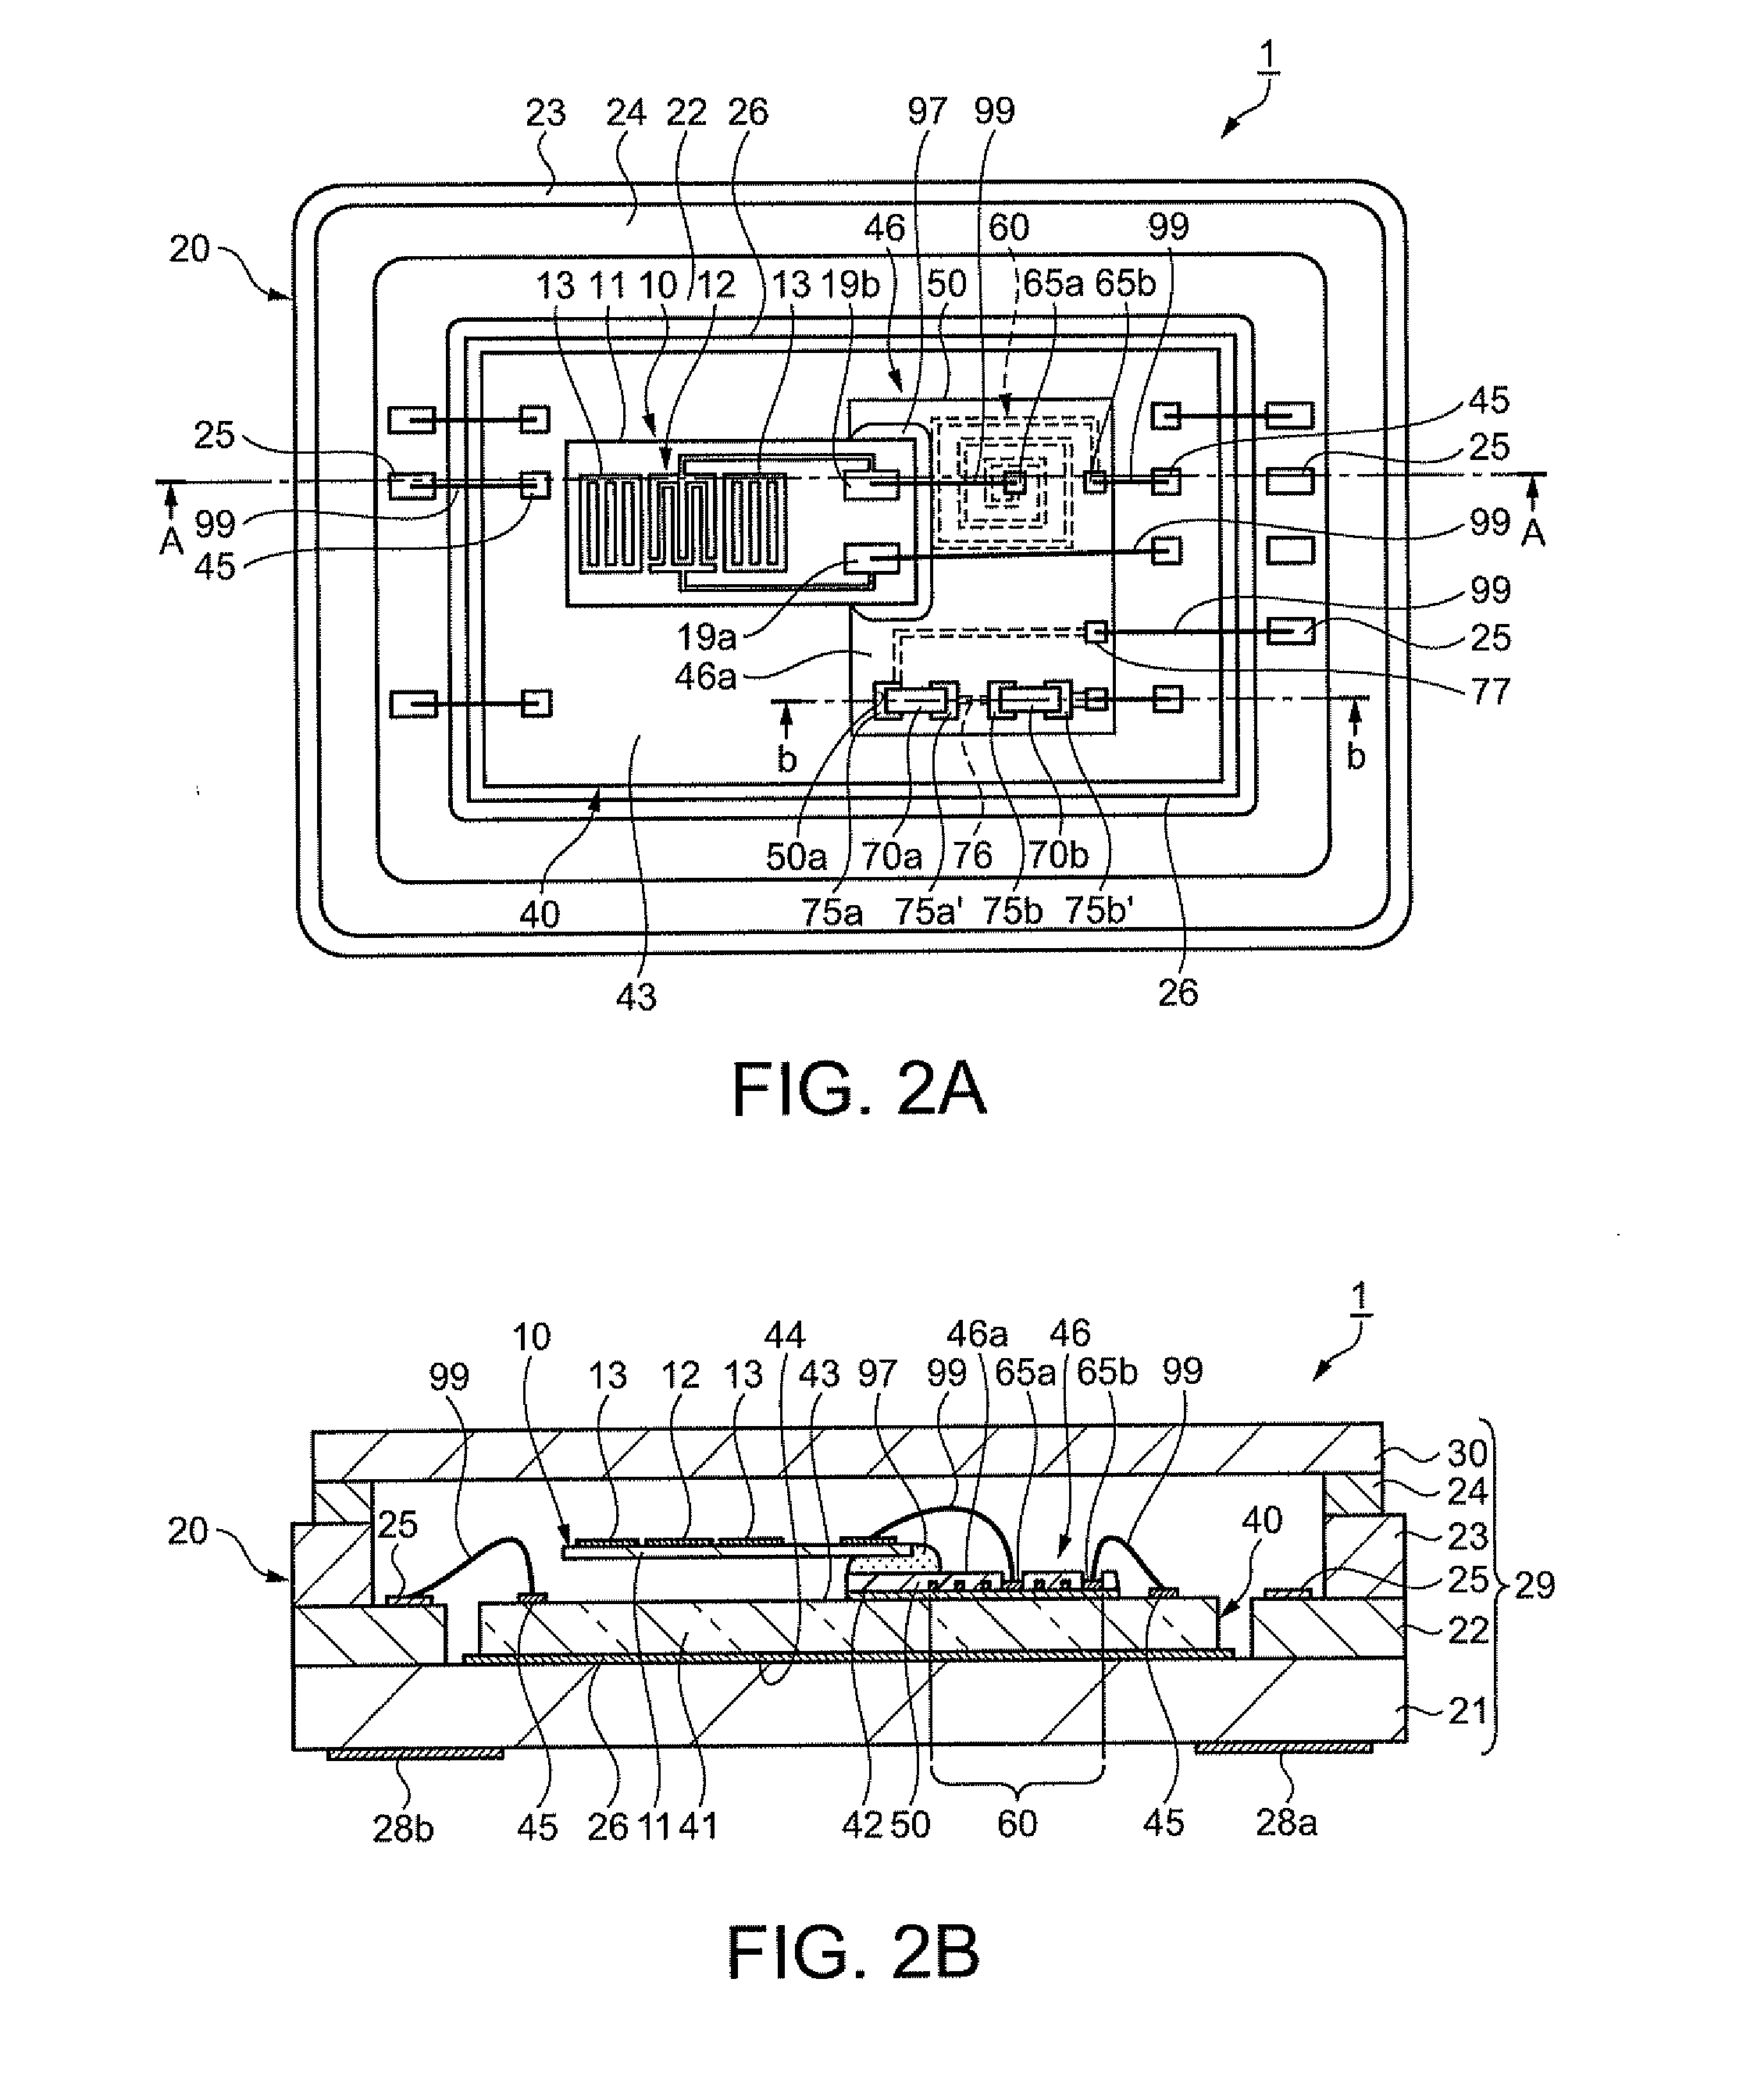 Piezoelectric oscillator and transmitter